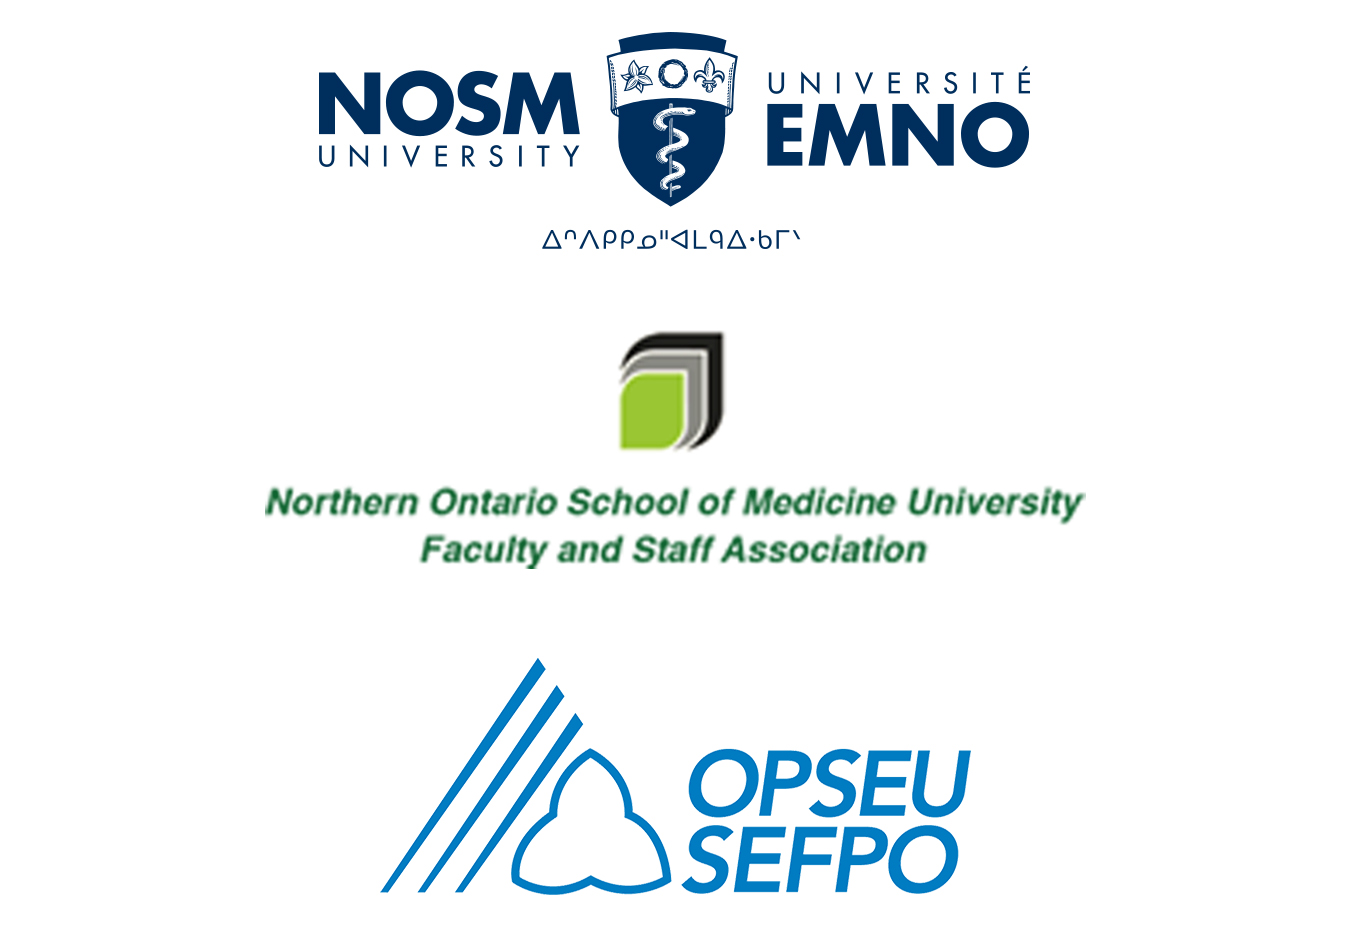 NOSM University logo with OPSEU Local 677, Unit 1 logo on a white background